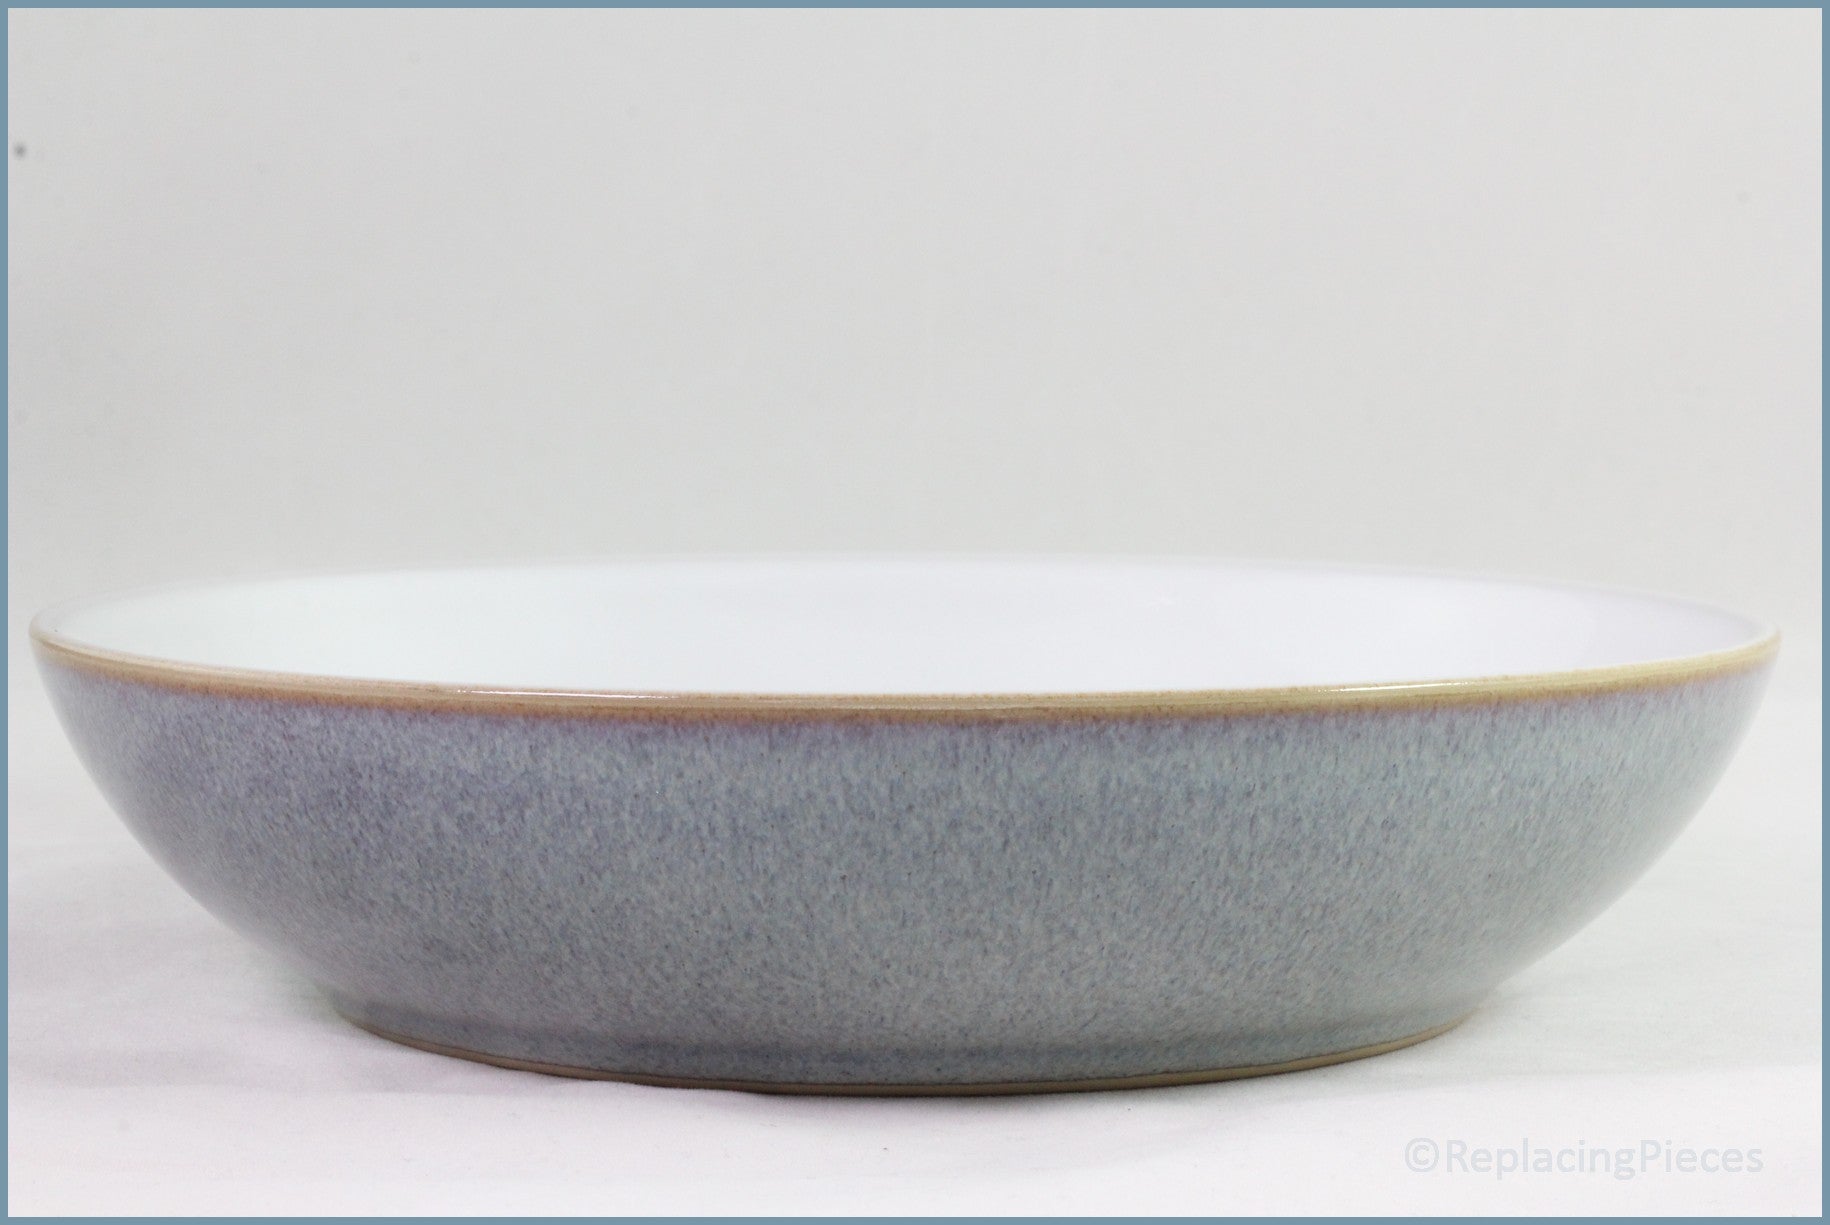 Denby - Jet - Pasta Bowl (Grey)